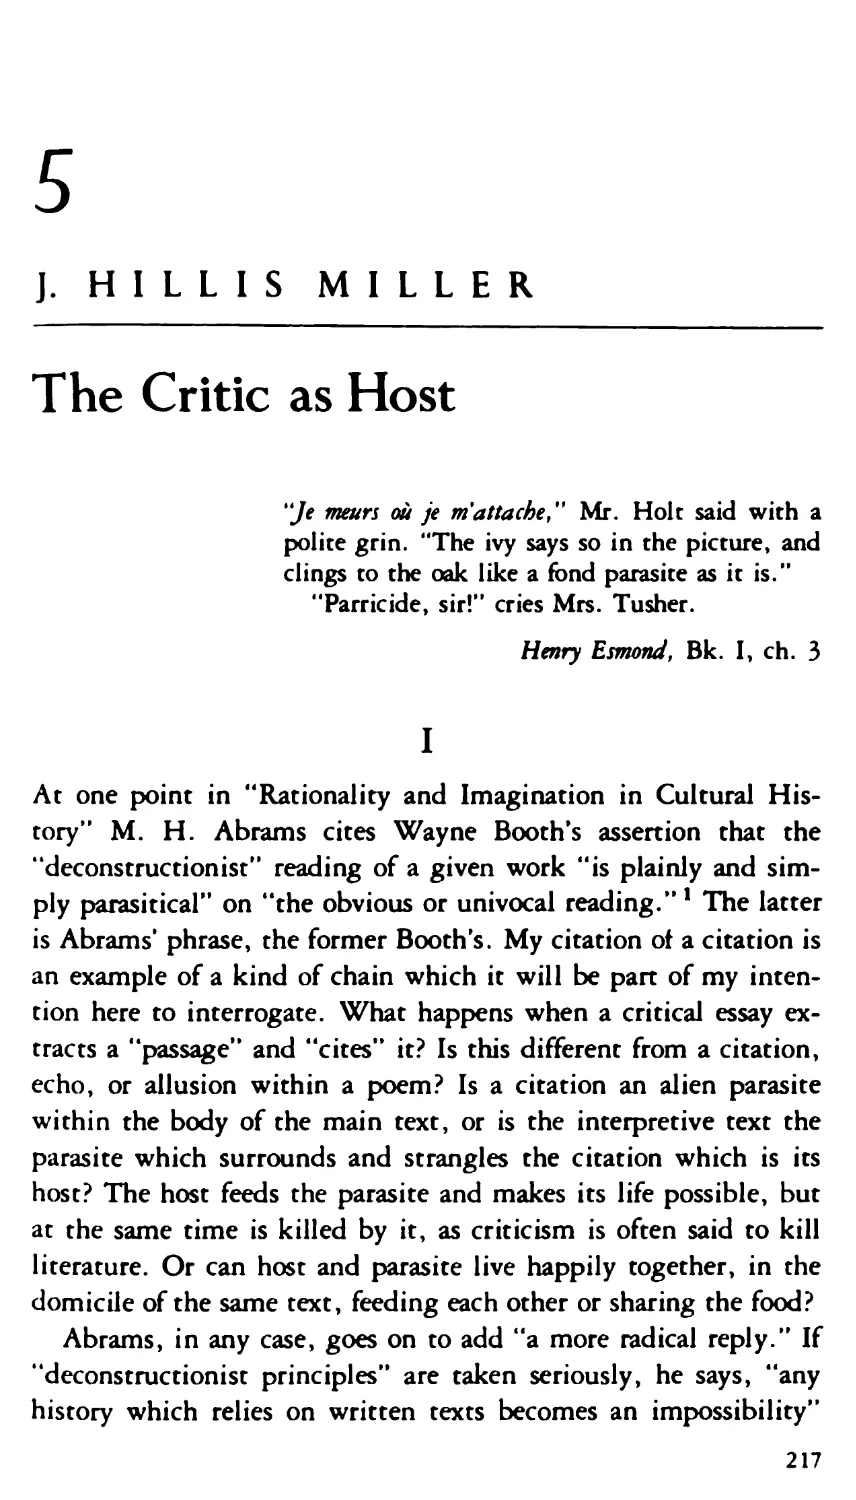 5. The Critic as Host. J. Hillis Miller